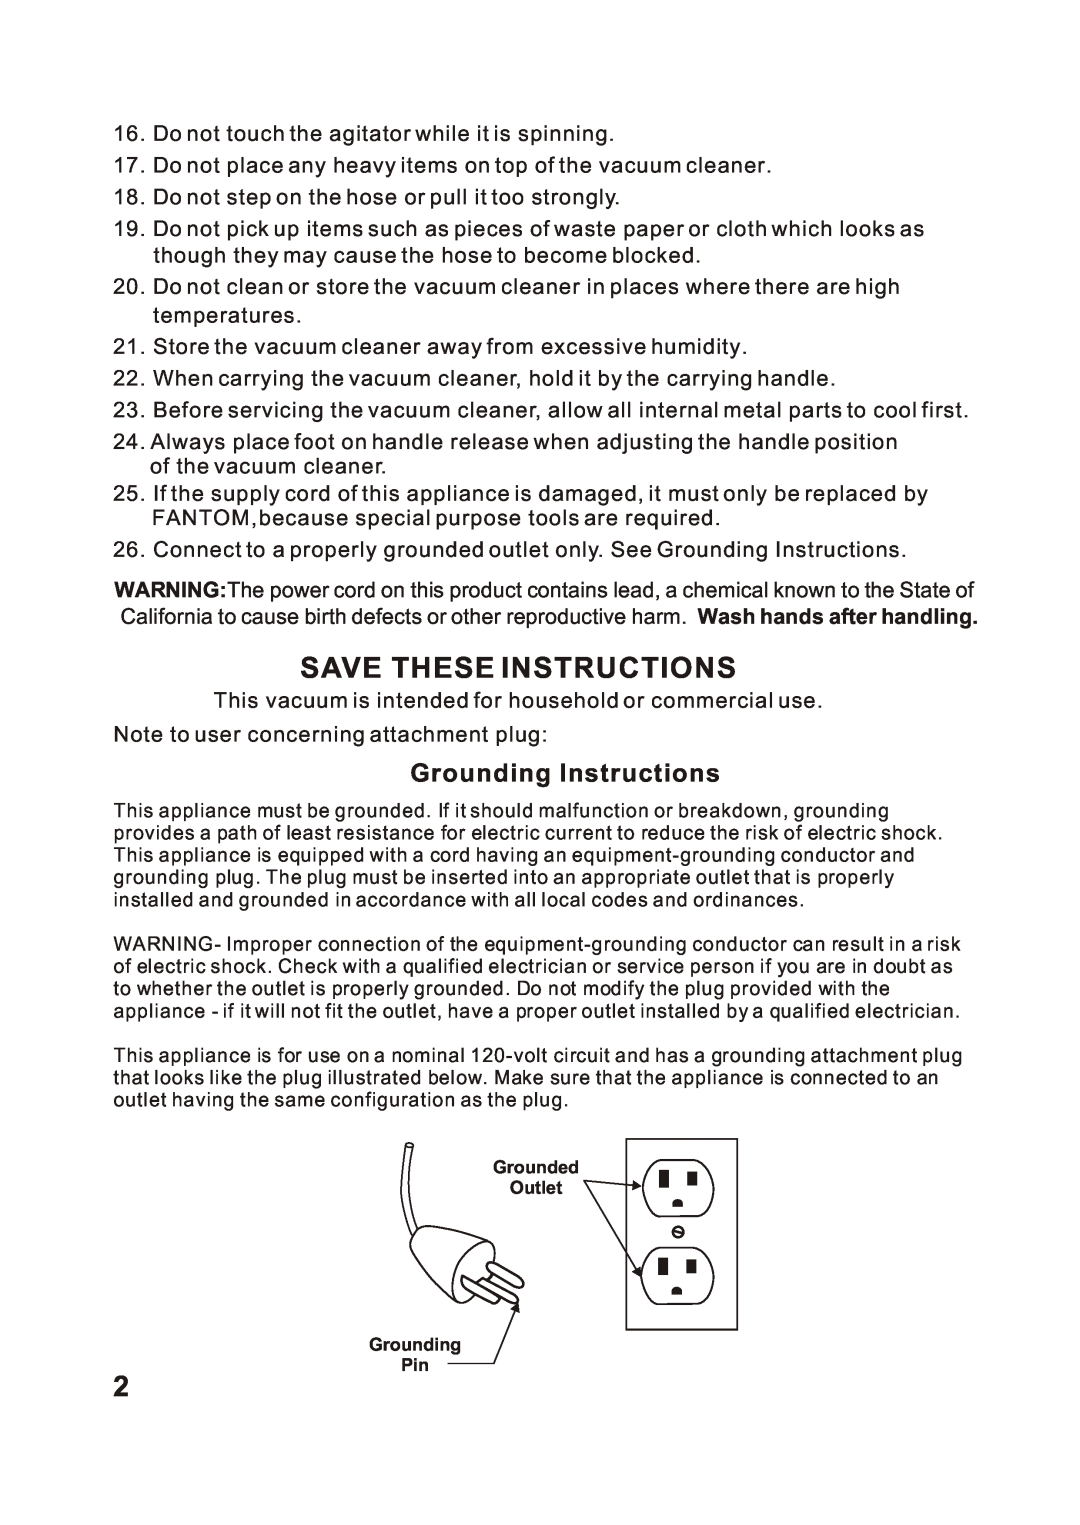 Fantom Vacuum FM744HY instruction manual Save These Instructions, Grounding Instructions 